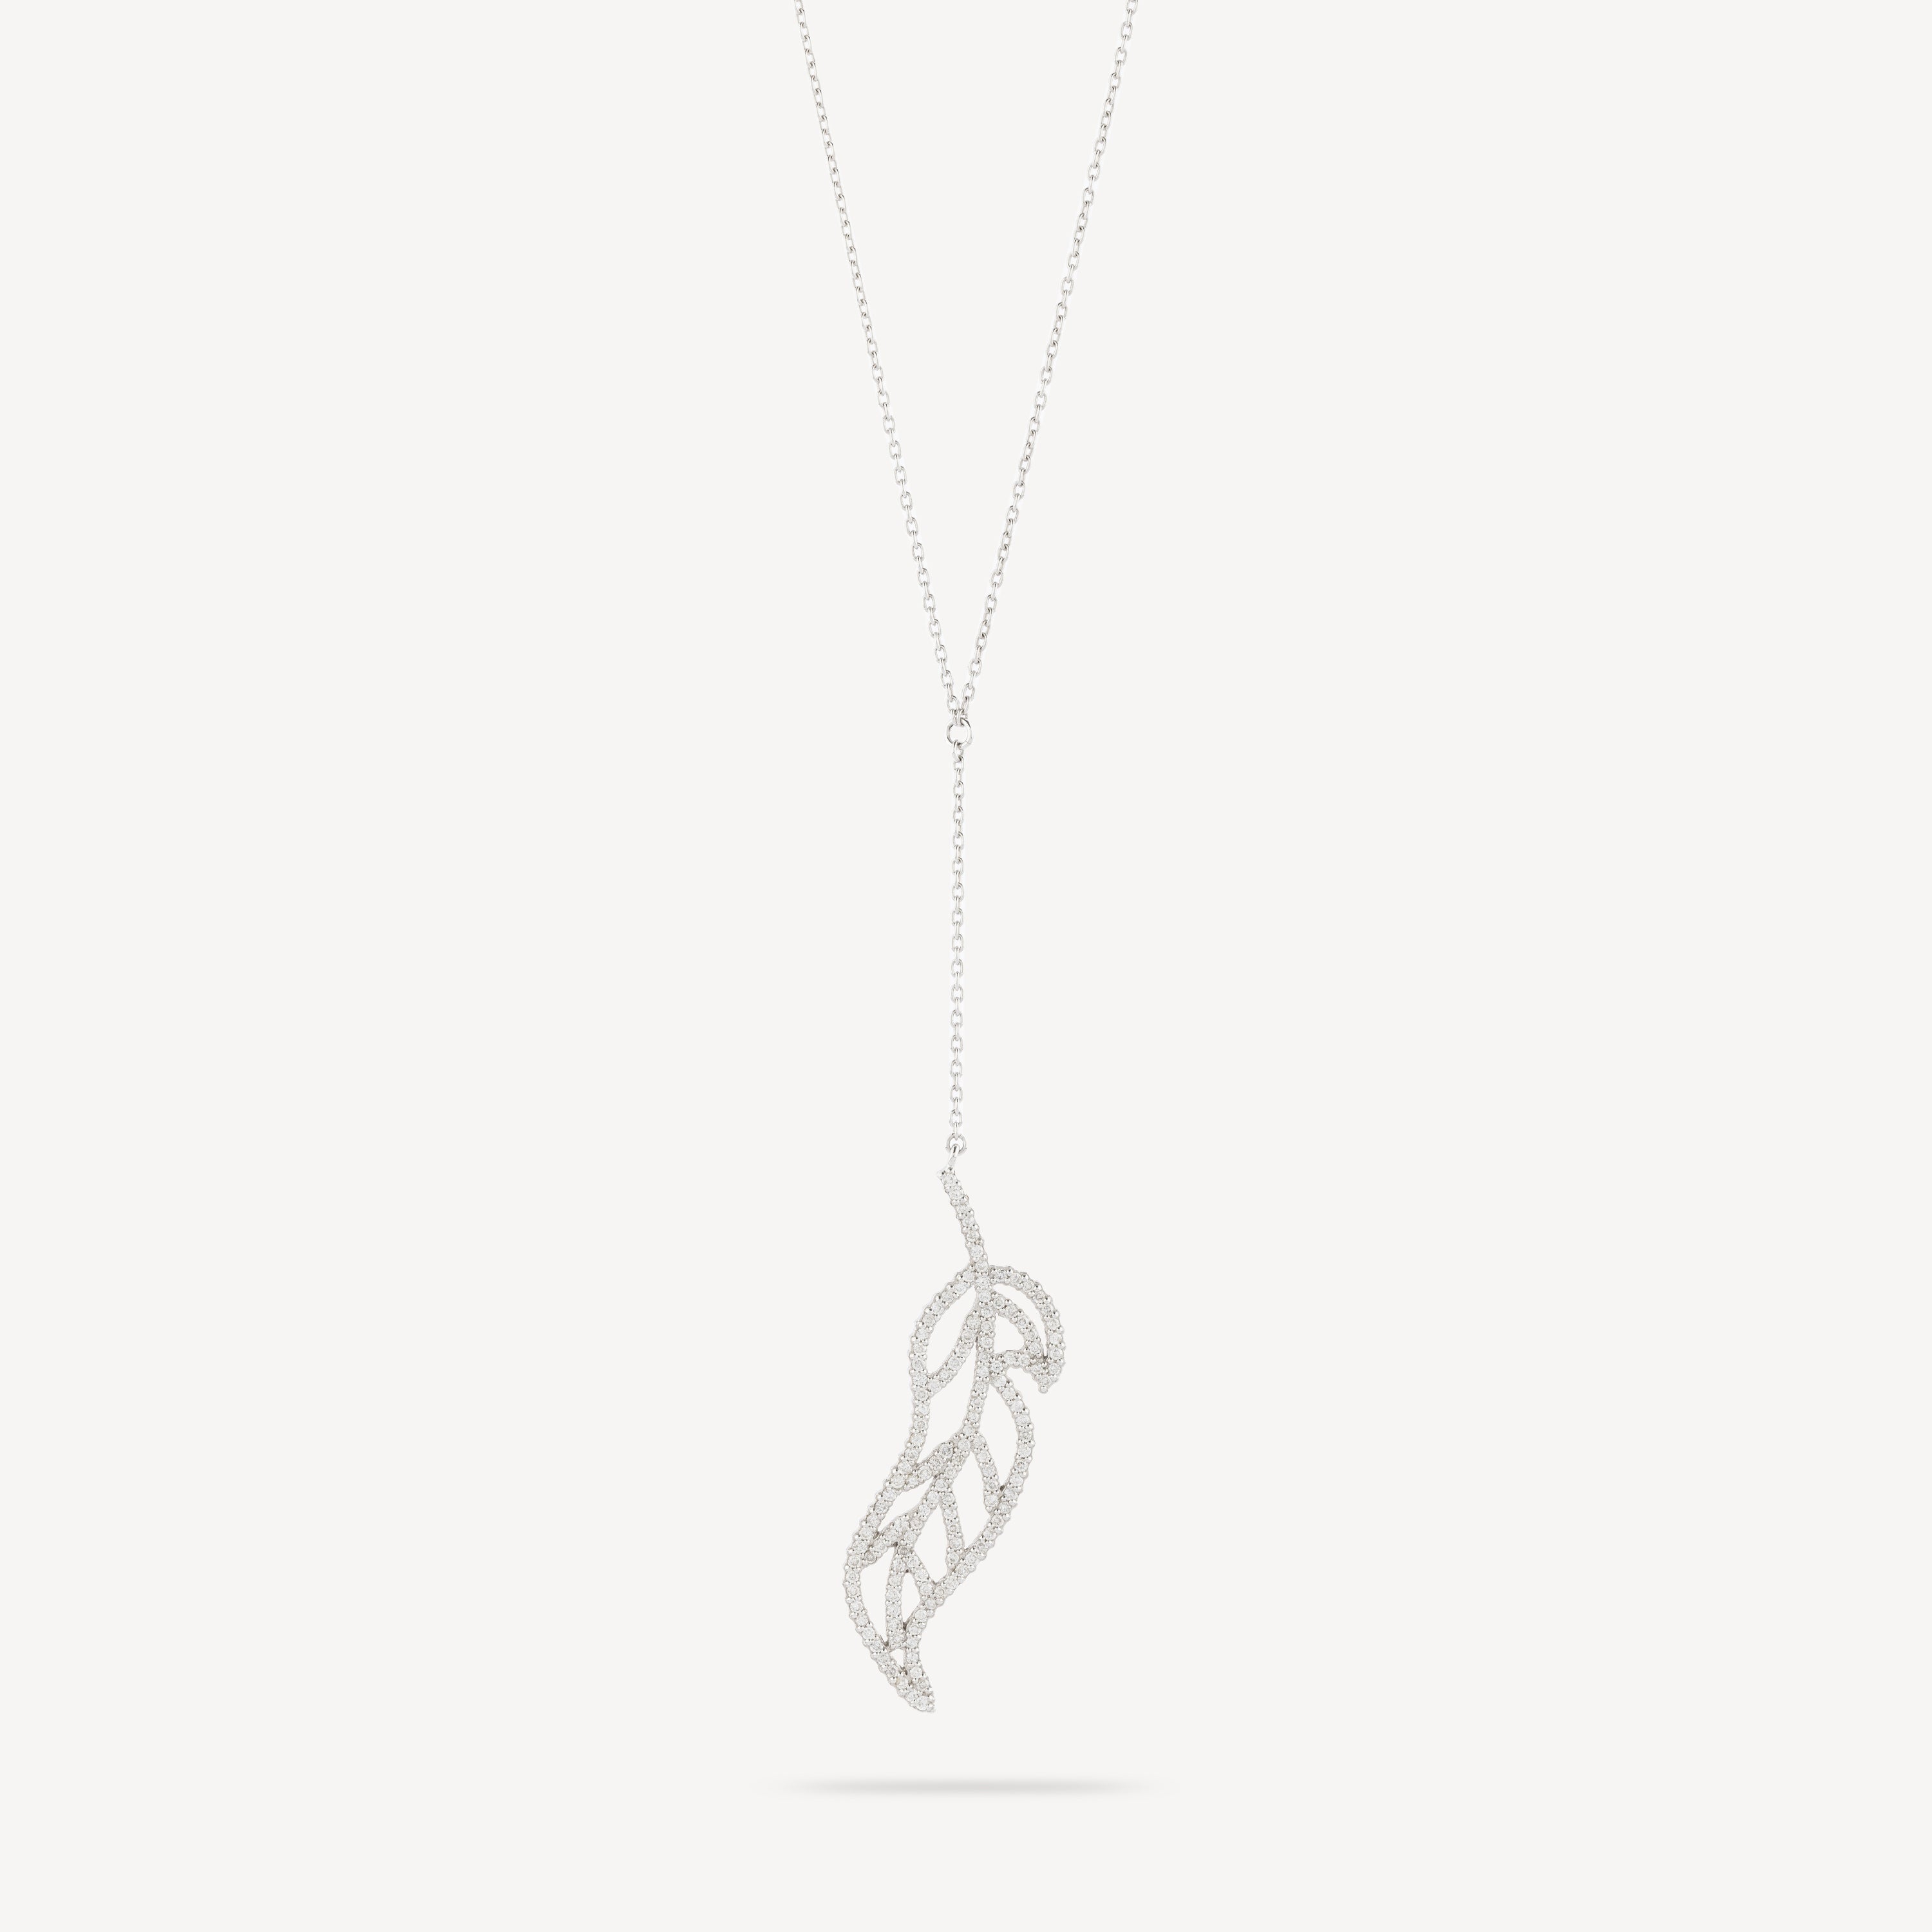 White gold leaf pendant necklace